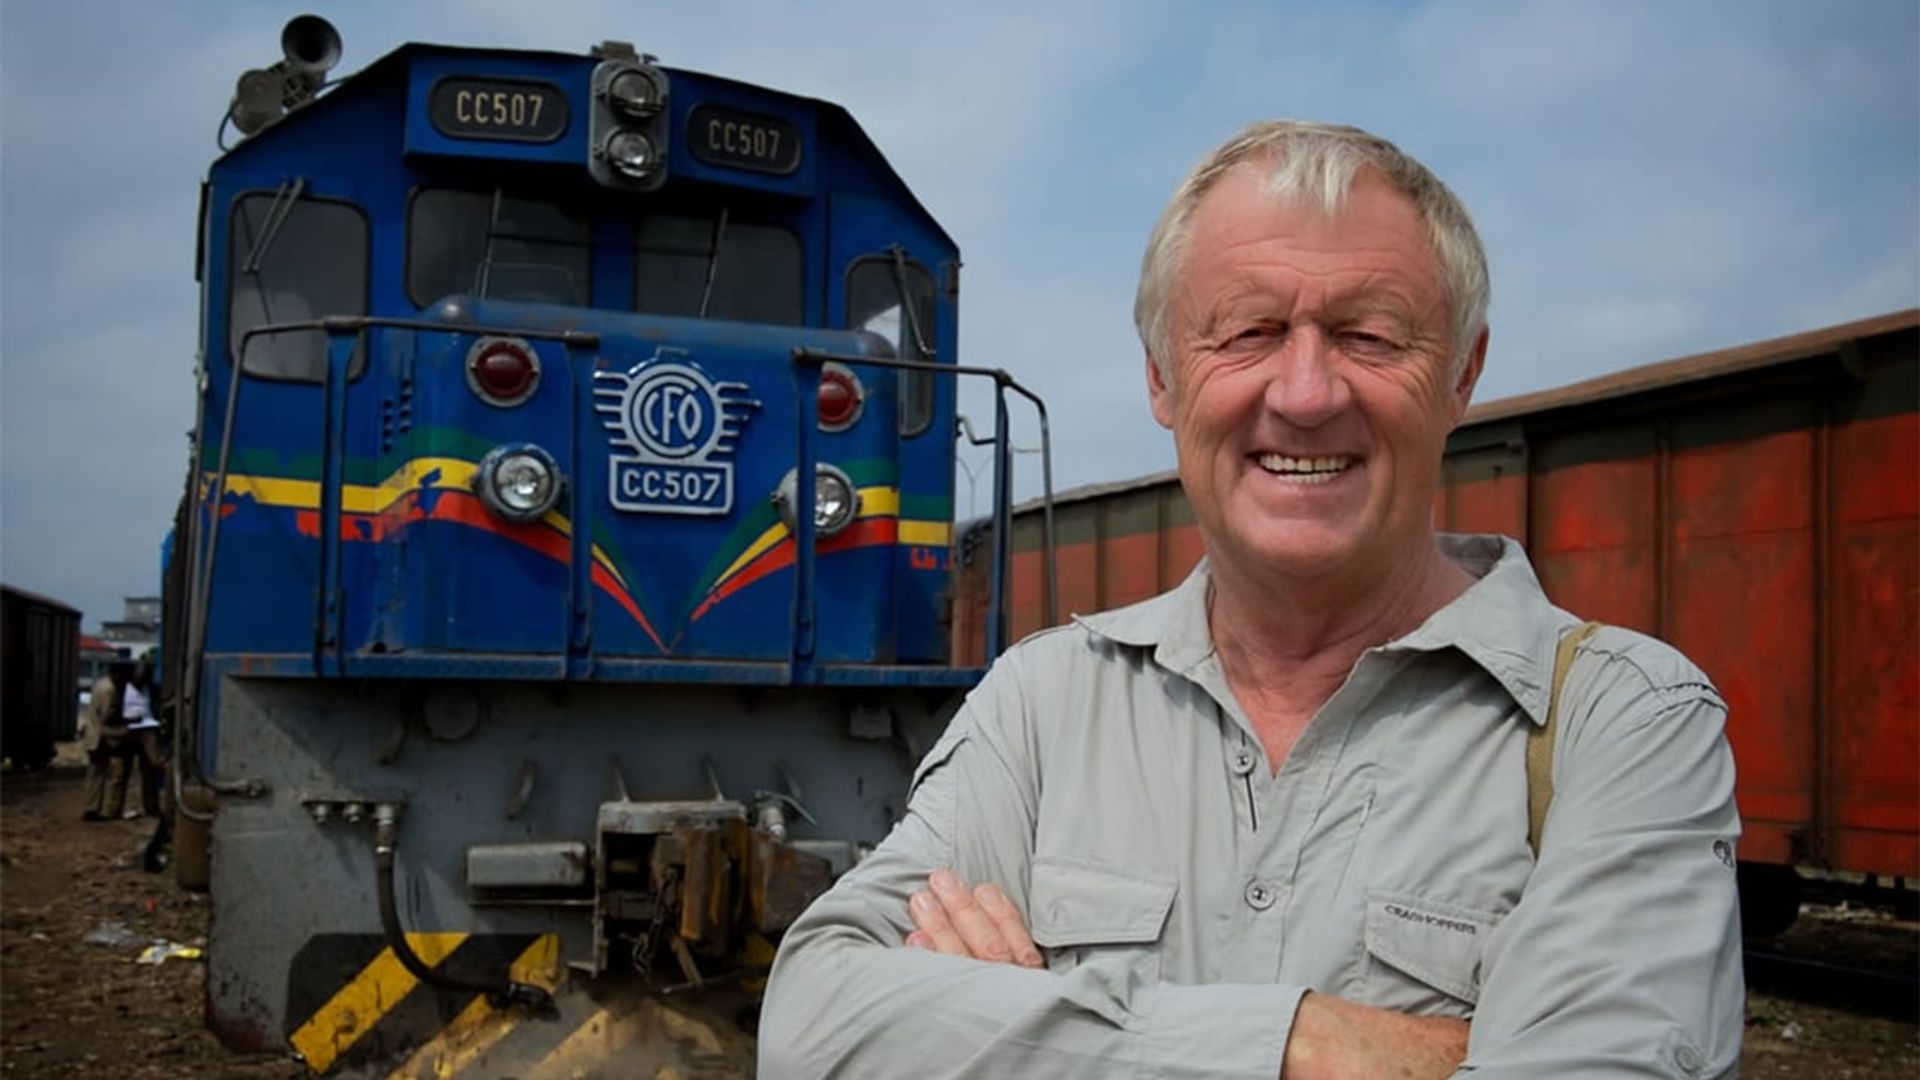 Chris Tarrant: Extreme Railways background